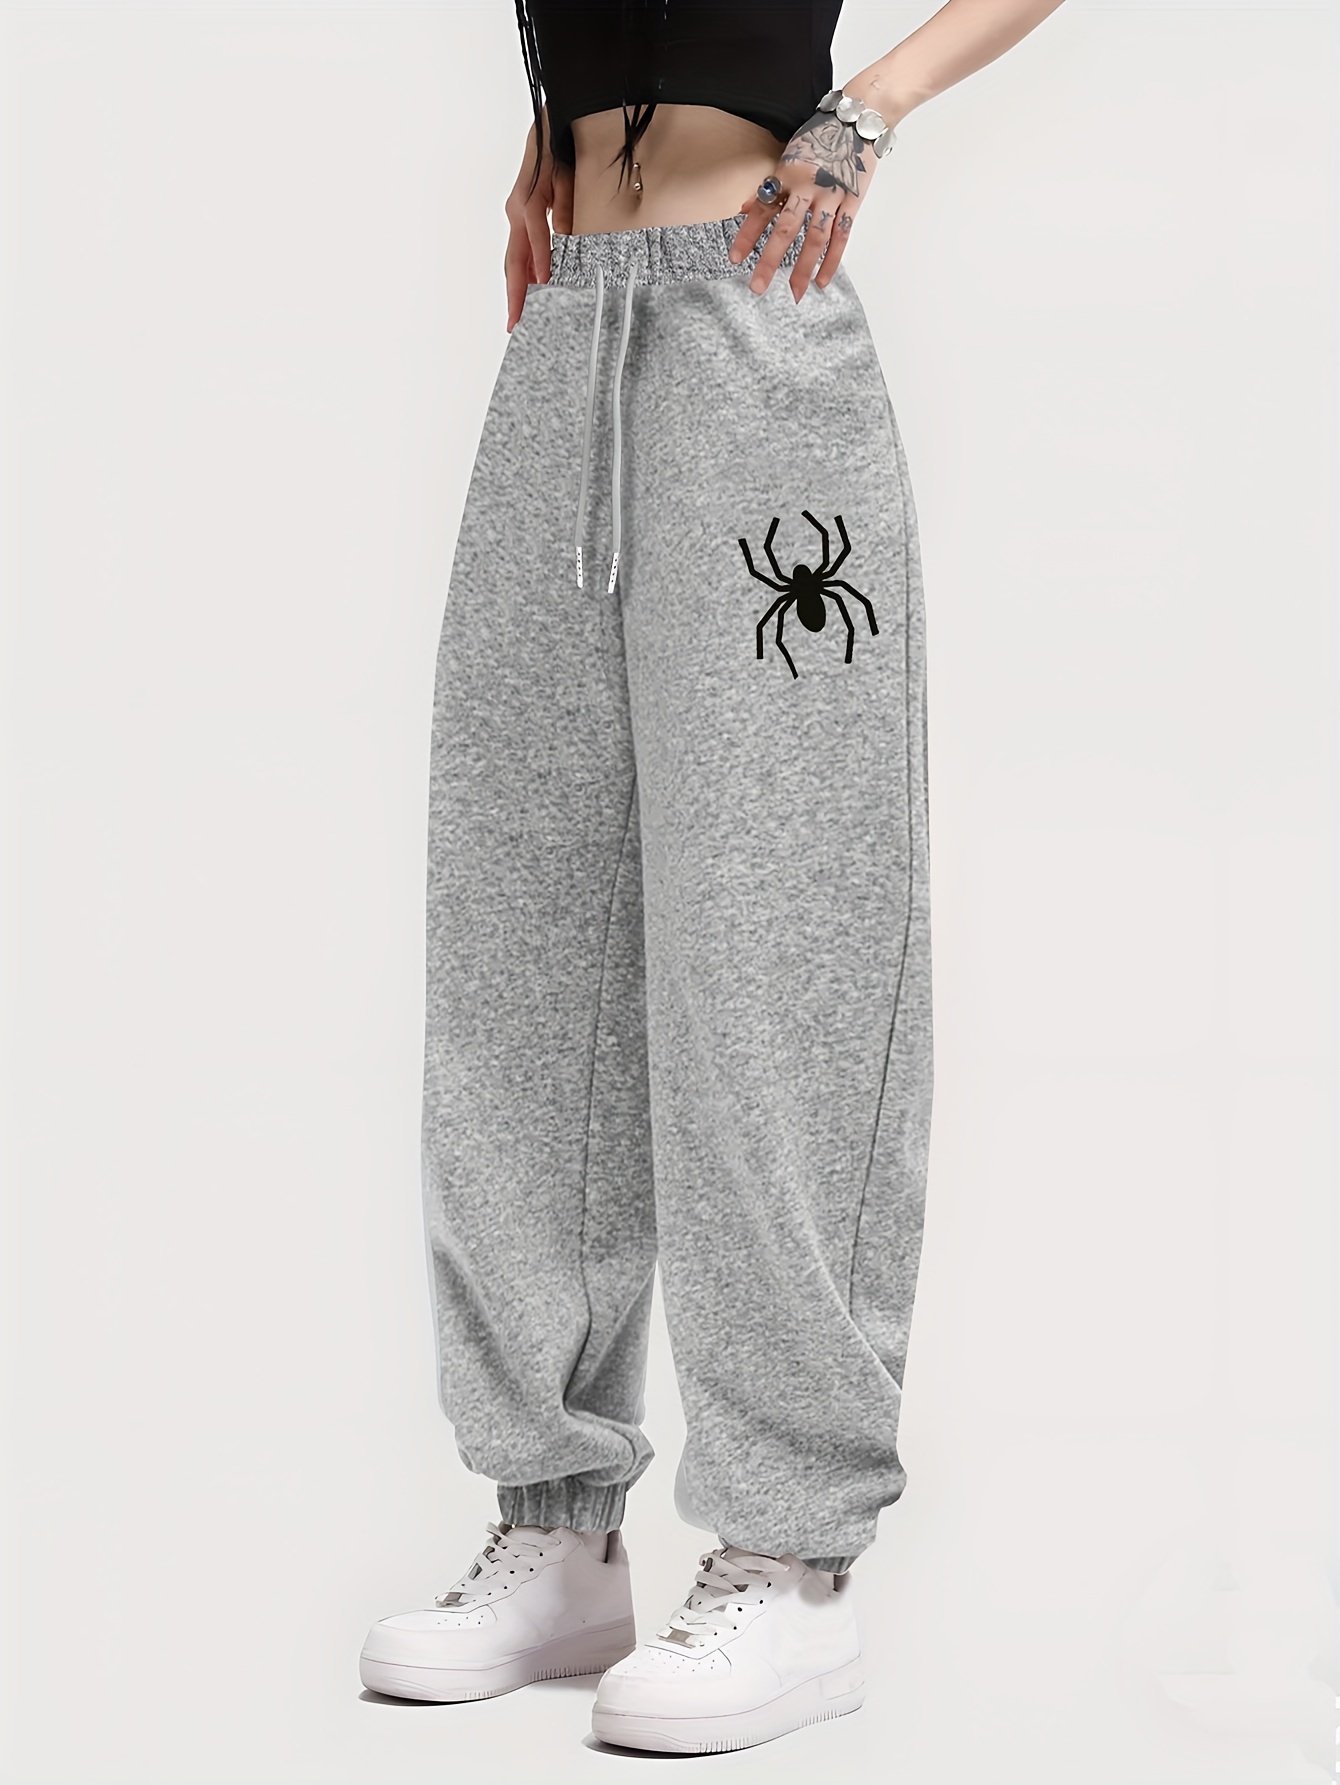 Women's Halloween Pumpkin Spider Web Print Elastic Women's Sports Yoga Pants  Elastic Tight Fitting Leggings - The Little Connection